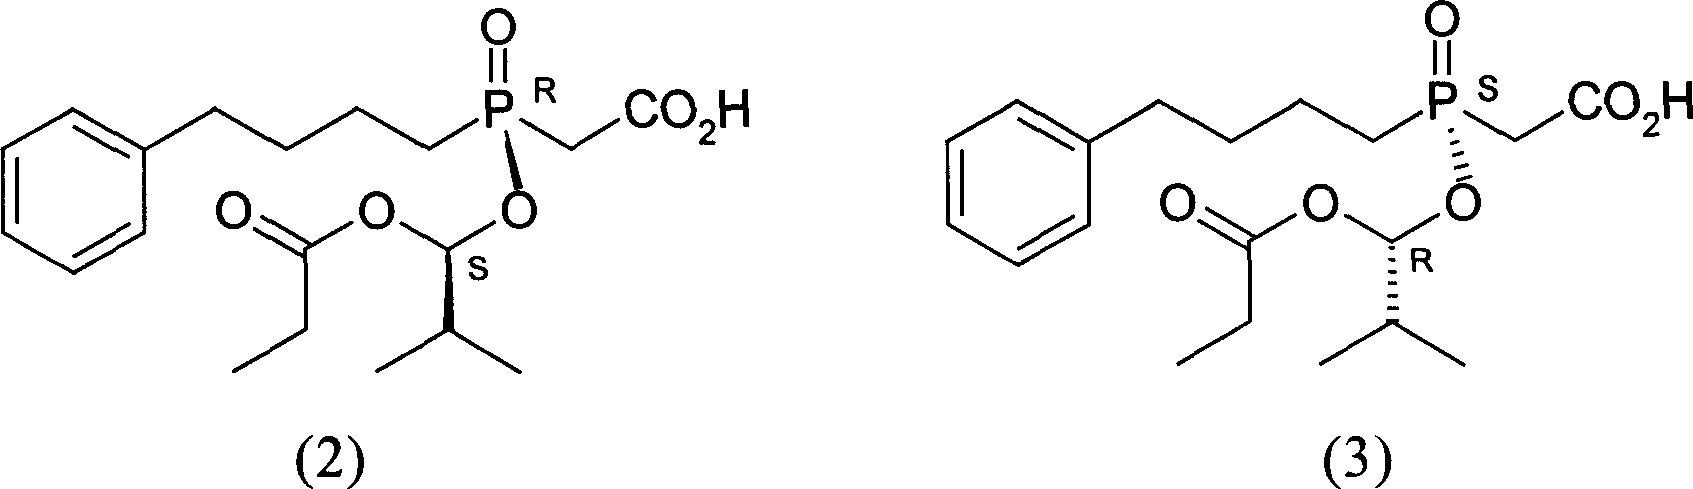 Optical separation method substituting oxyphosphonate acetate